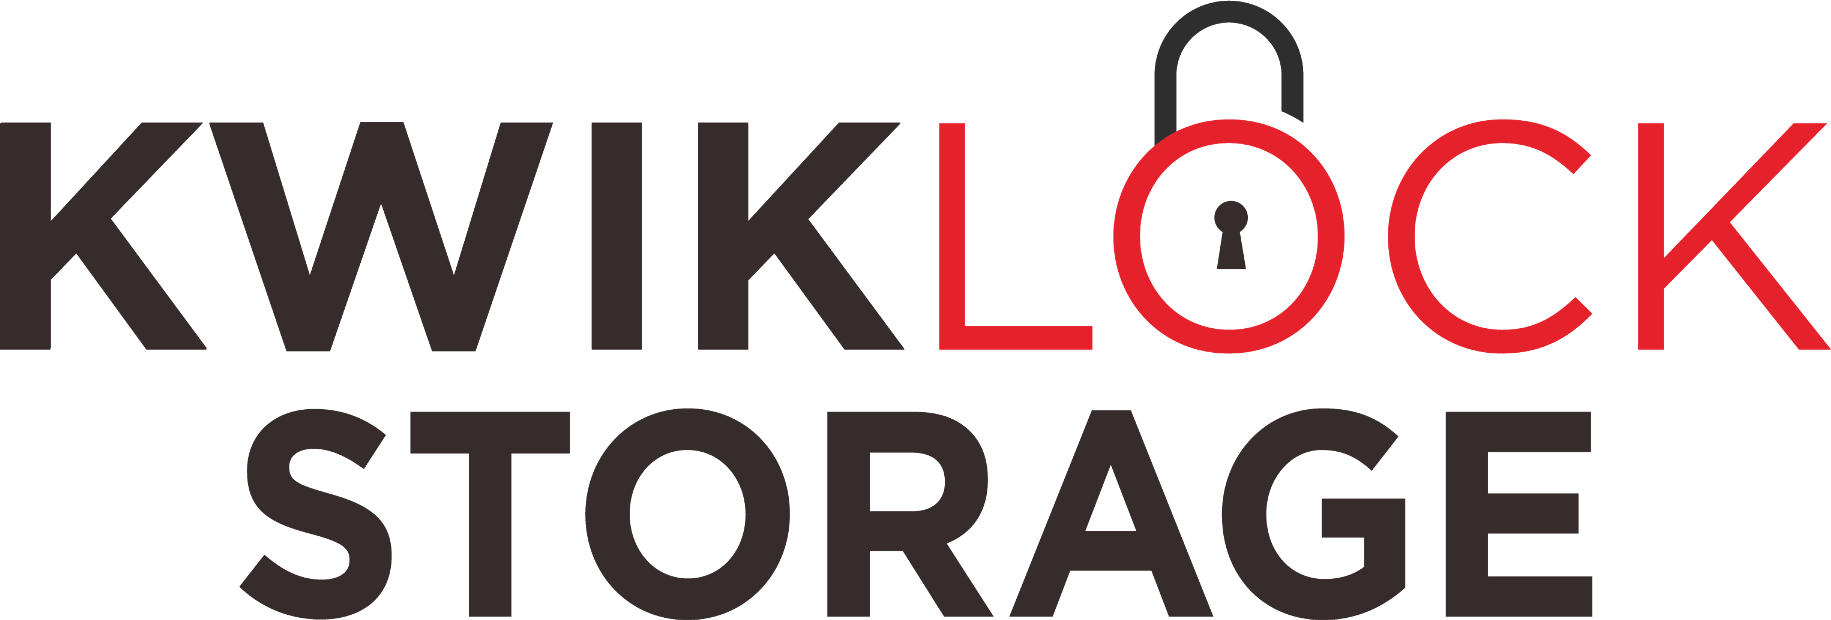 Kwiklock Storage Logo